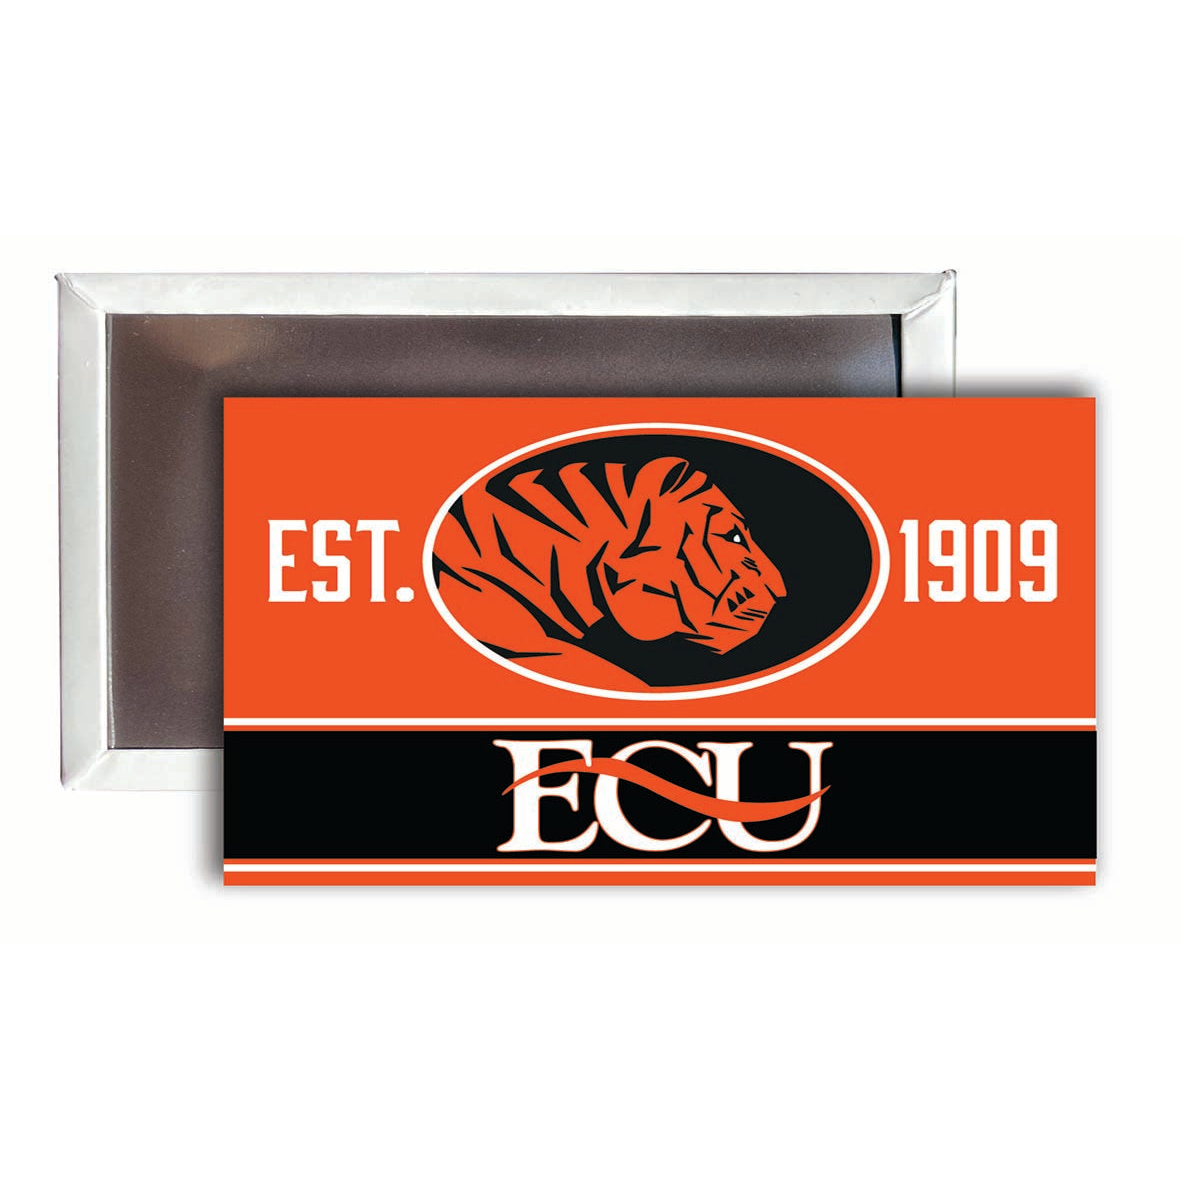 East Central University Tigers 2x3-Inch Fridge Magnet